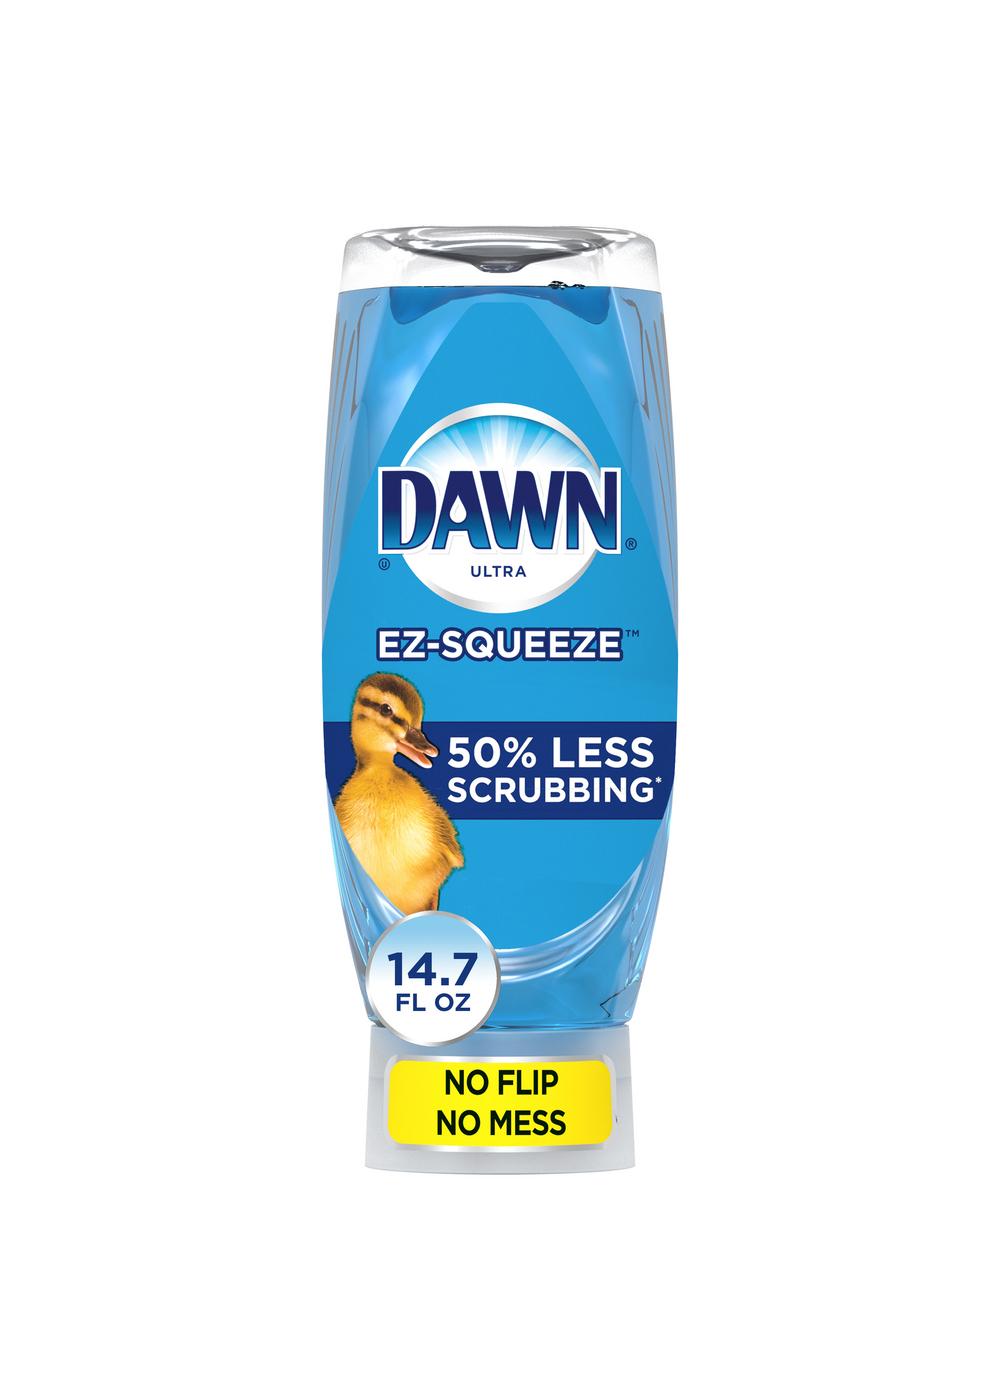 Dawn Ultra Original Scent Ez-Squeeze Liquid Dish Soap; image 1 of 8